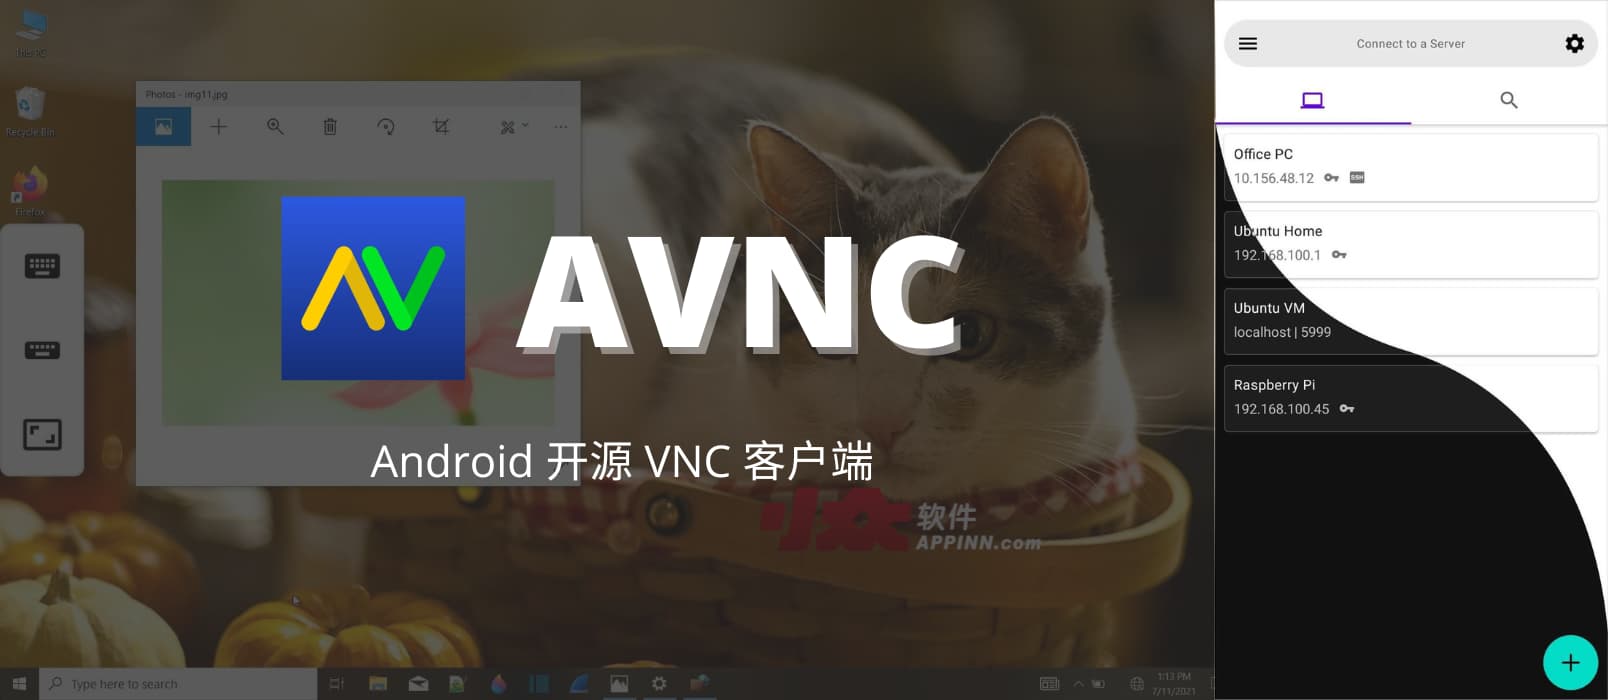 AVNC – Android 上的开源 VNC 客户端